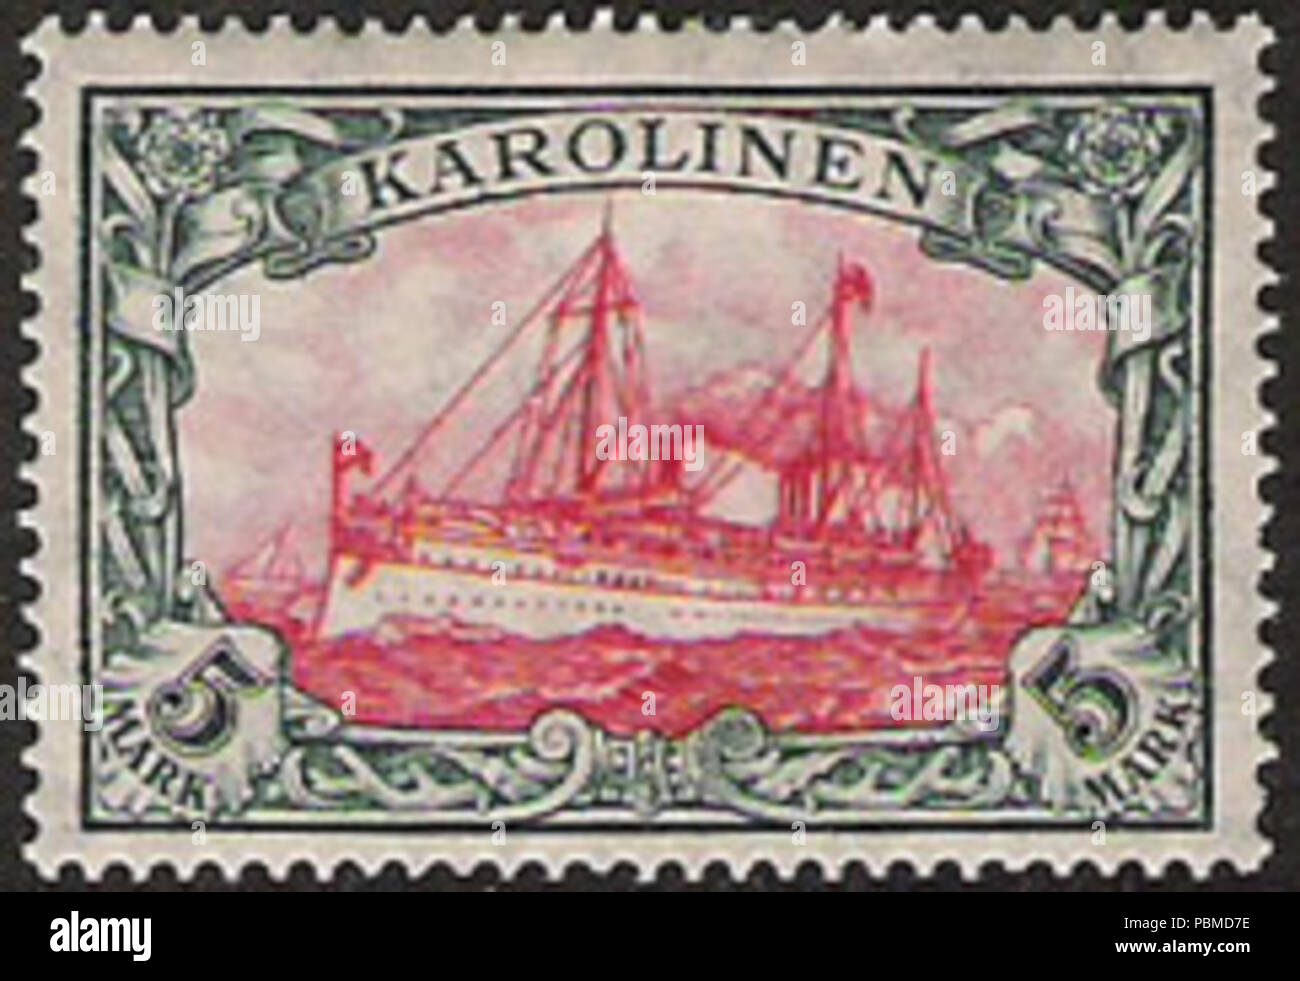 854 Karolinen-stamp Stock Photo